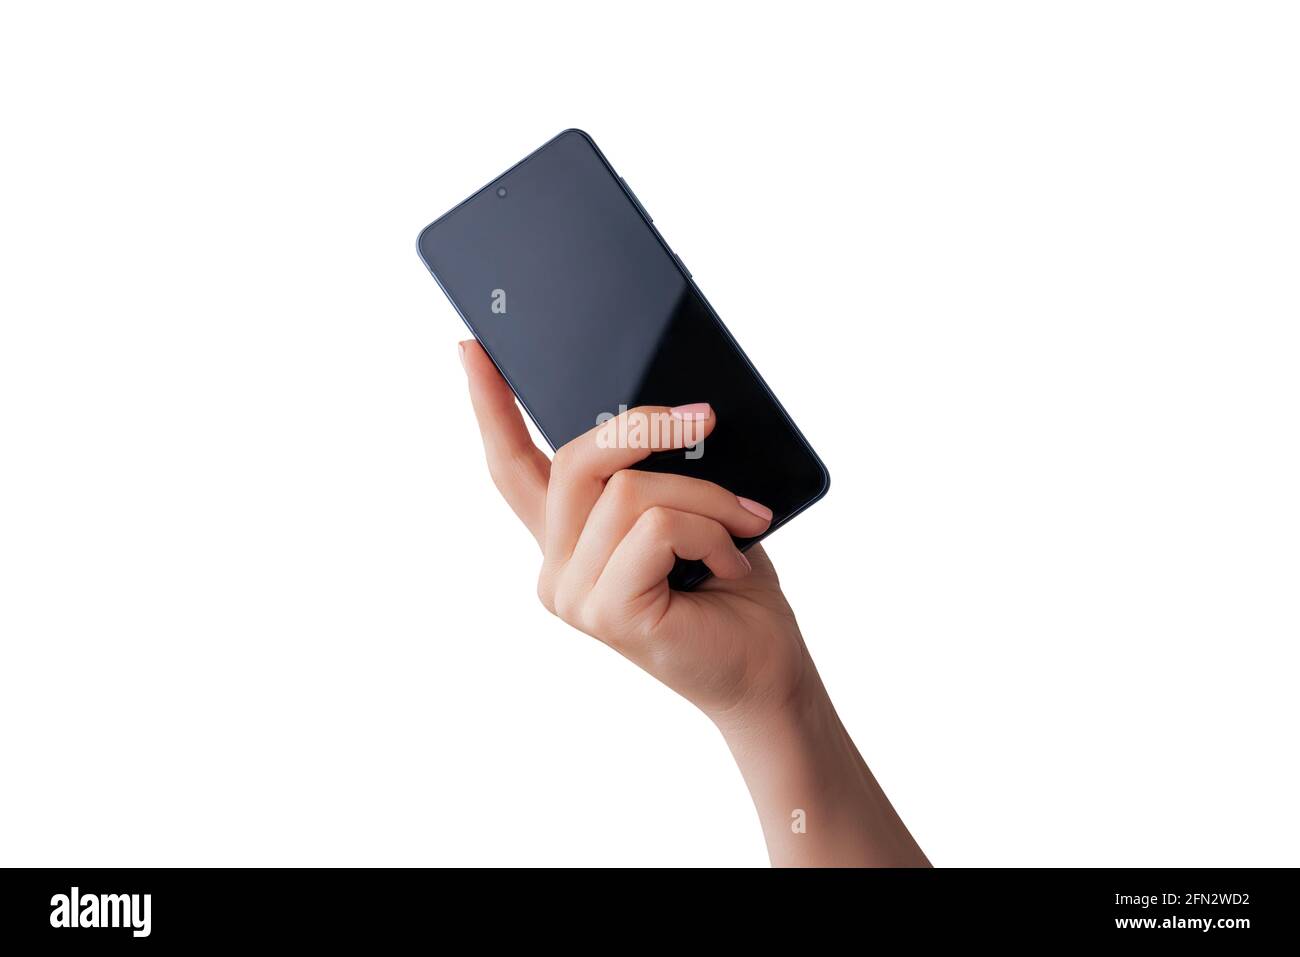 Teléfono inteligente moderno con diseño de mano aislado. Concepto de tecnología móvil Foto de stock